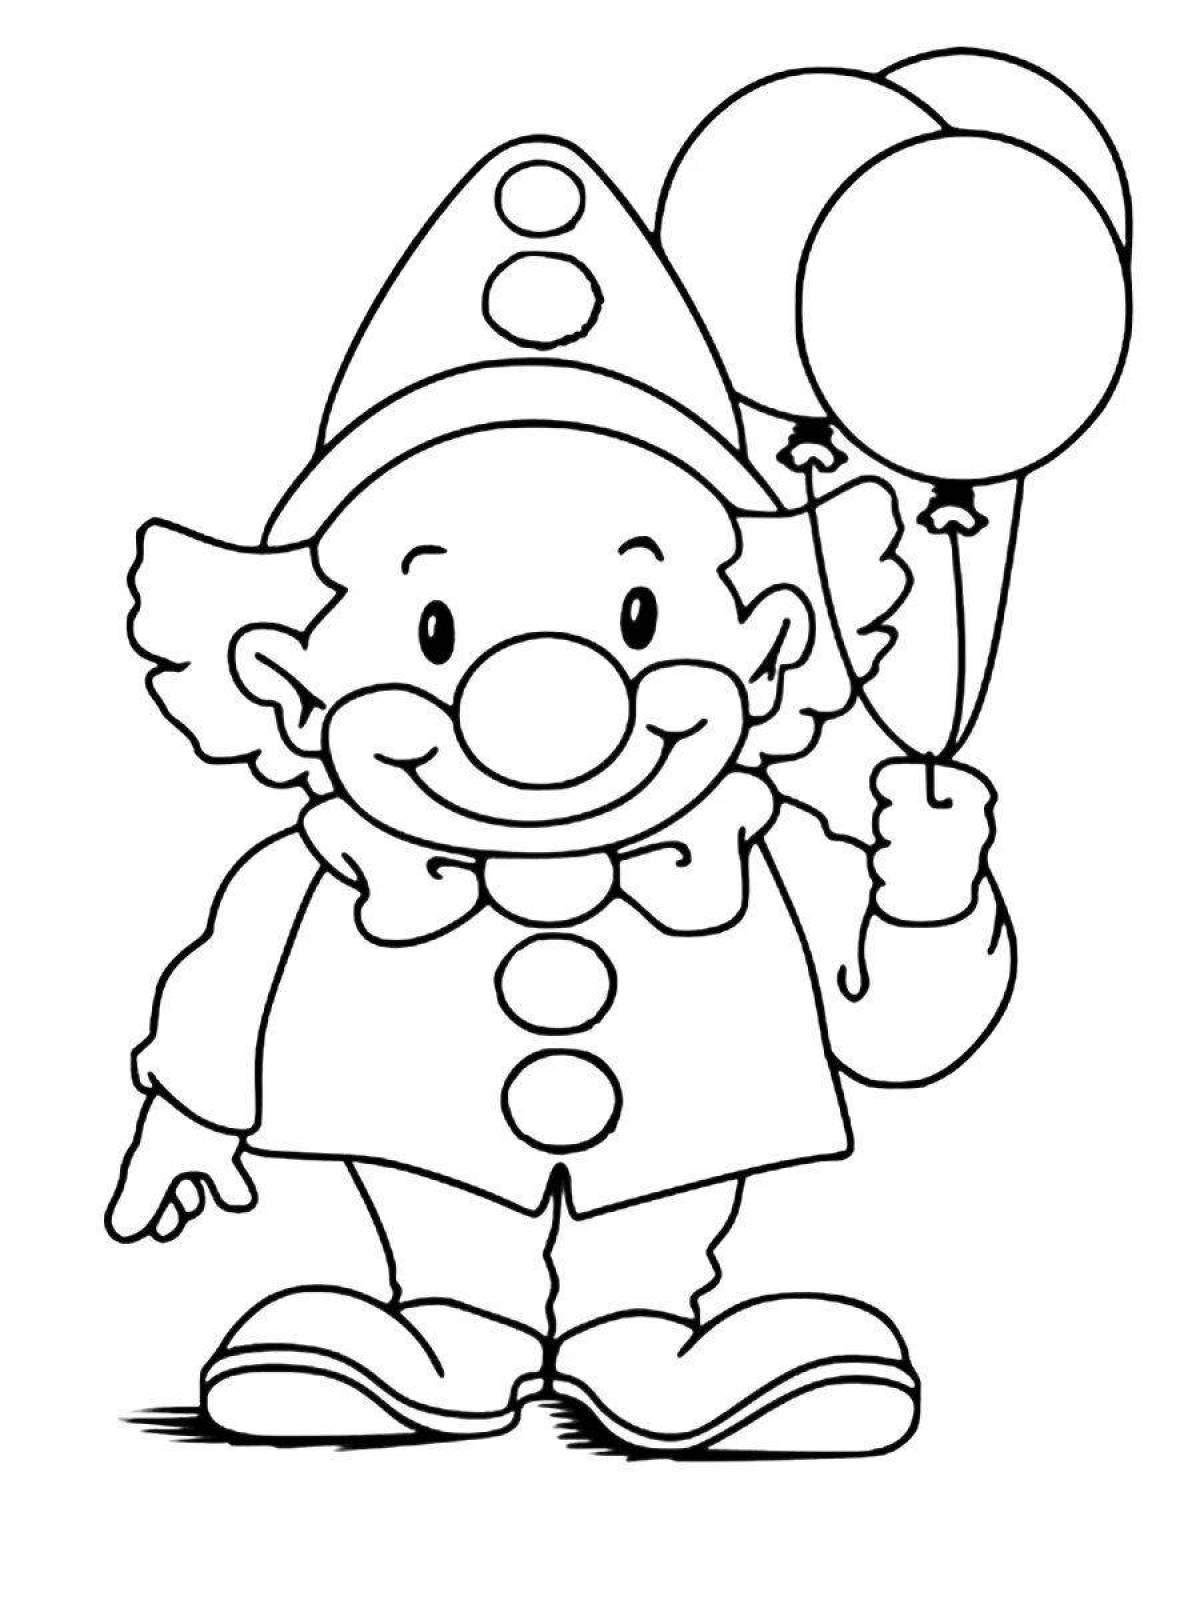 A sketch of a joyful clown